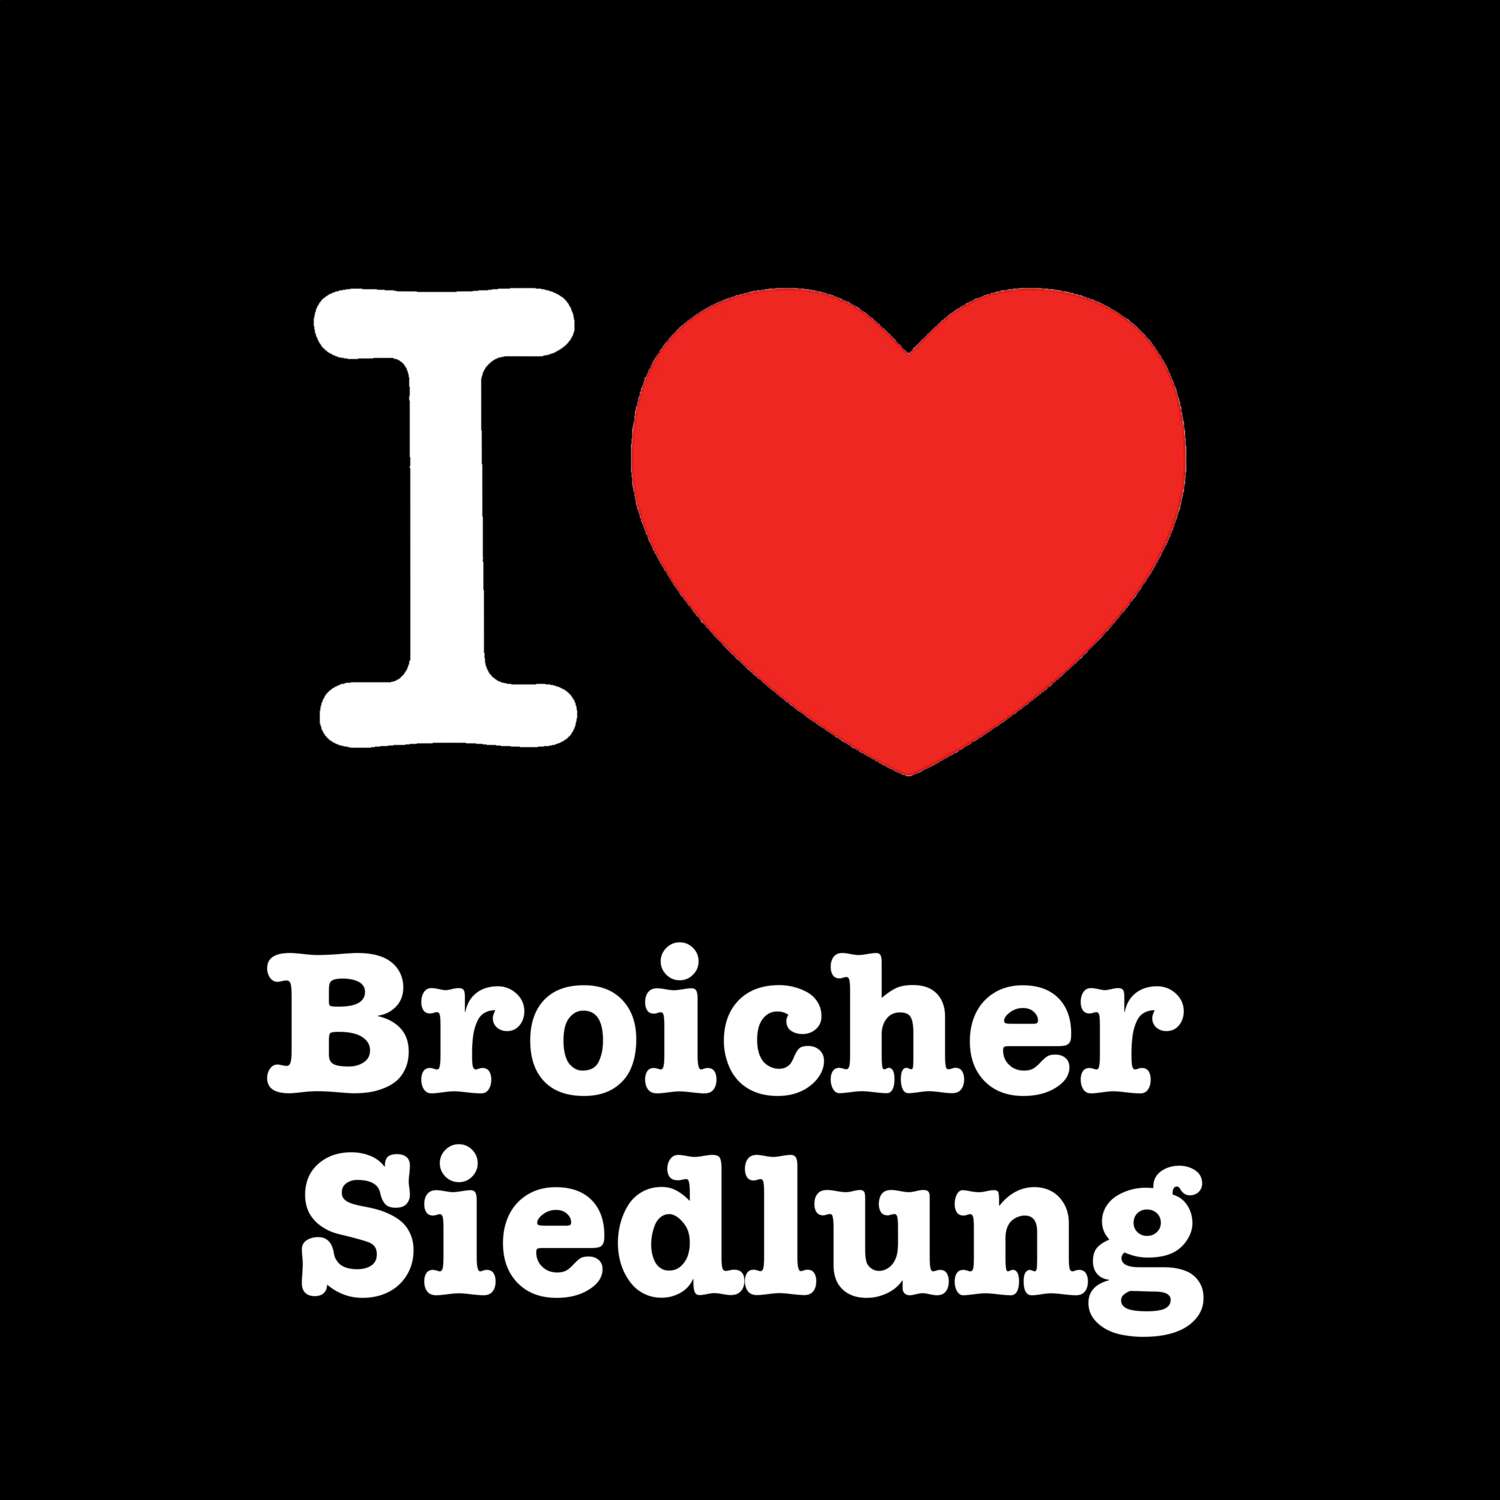 Broicher Siedlung T-Shirt »I love«